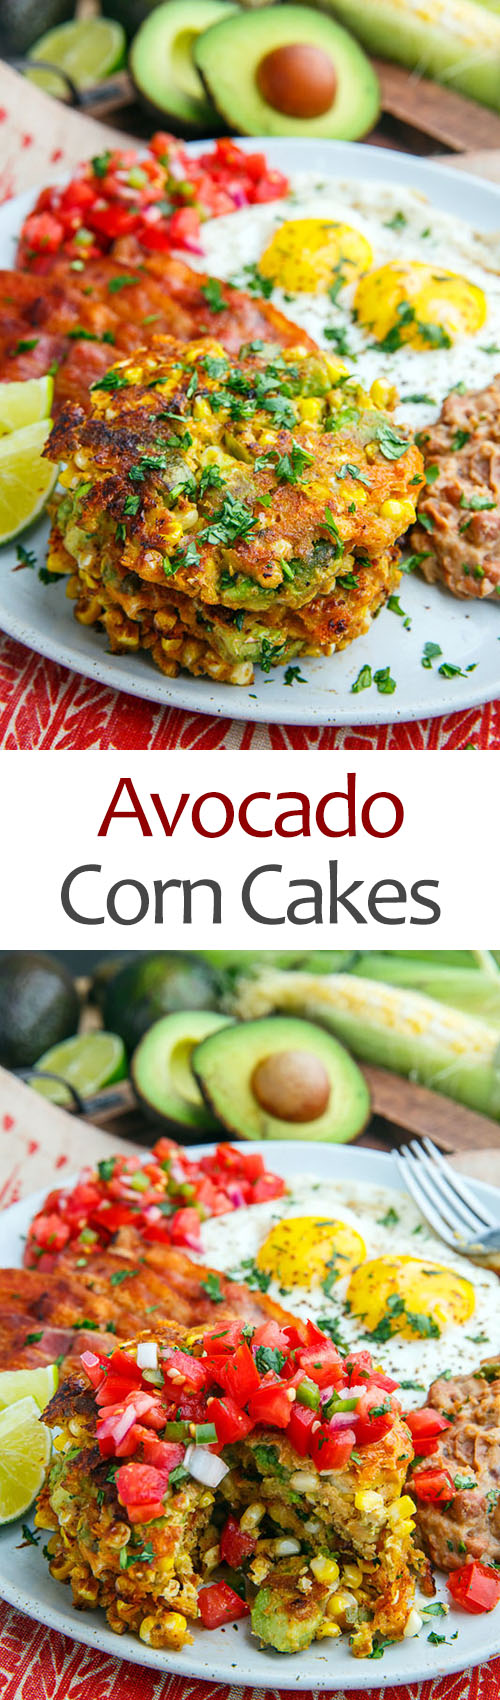 Avocado and Cheddar Corn Cakes